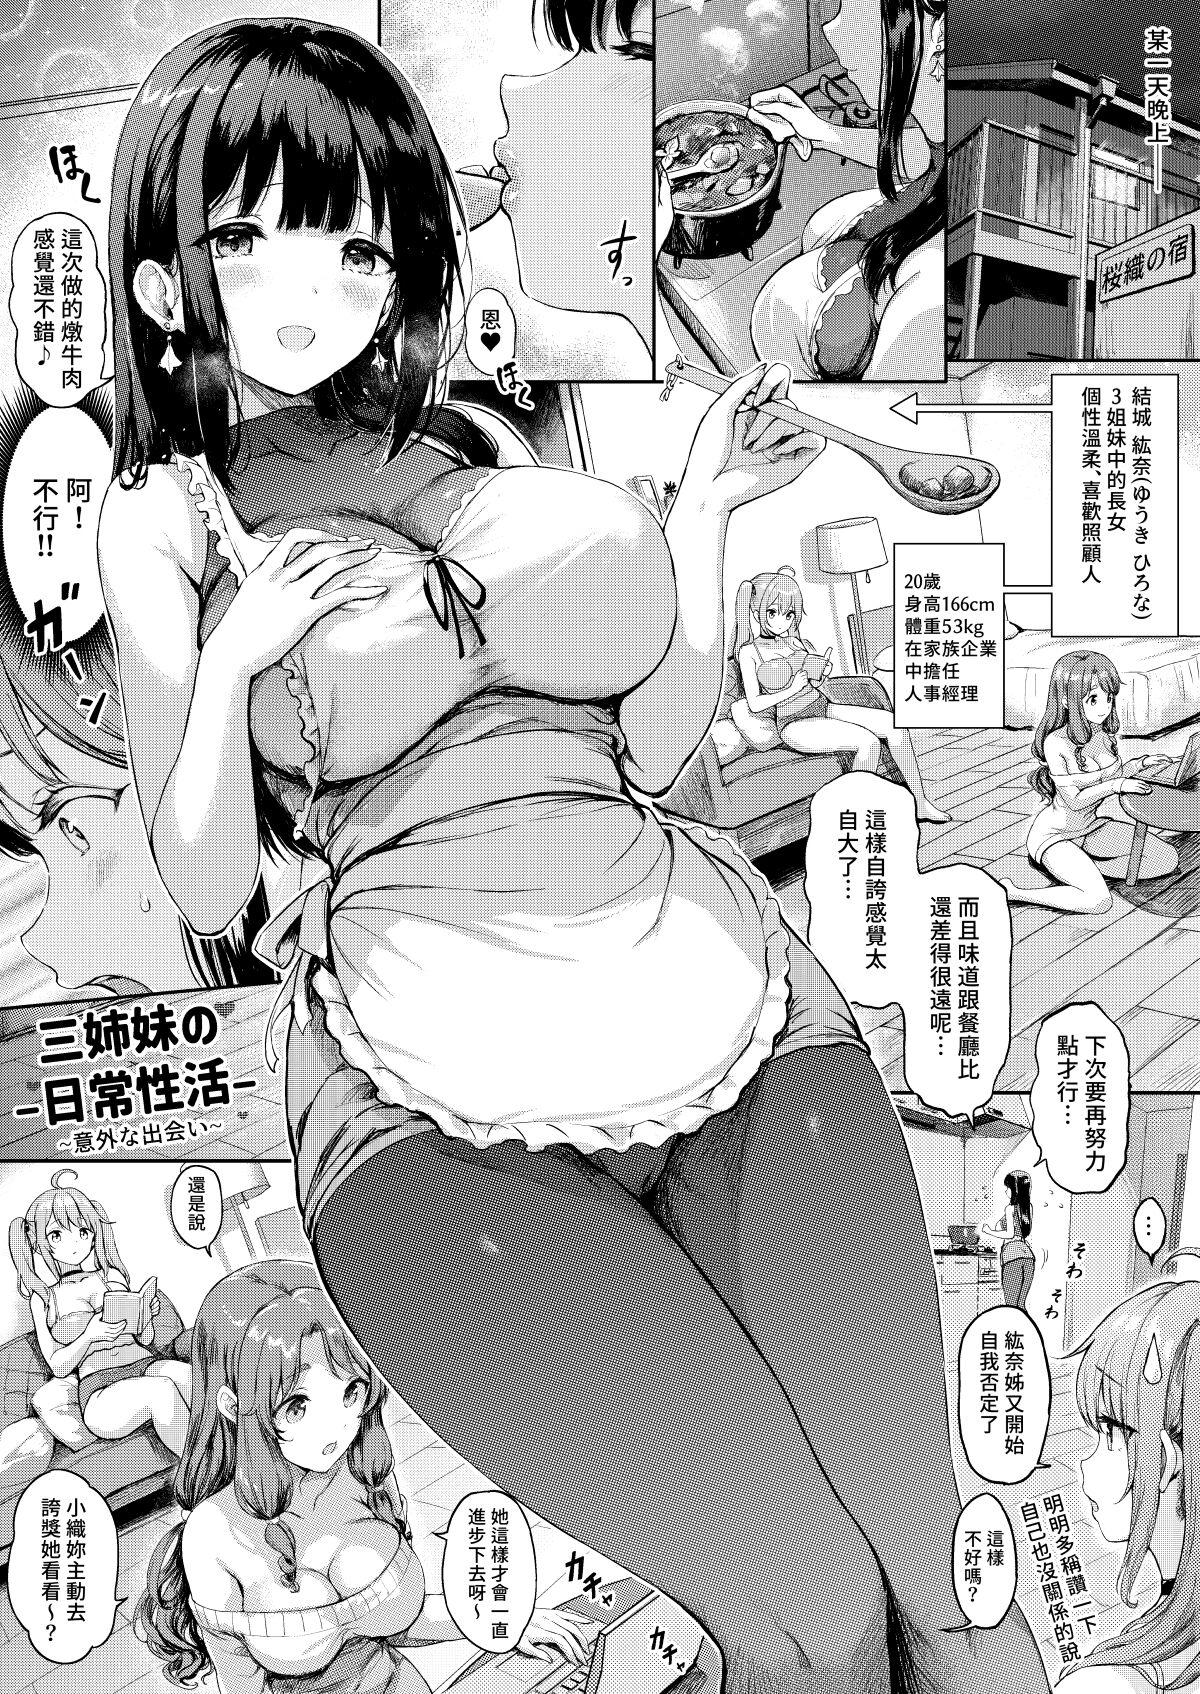 Outside Sanshimai Manga ep1 p1-9 - Original Latex - Page 1